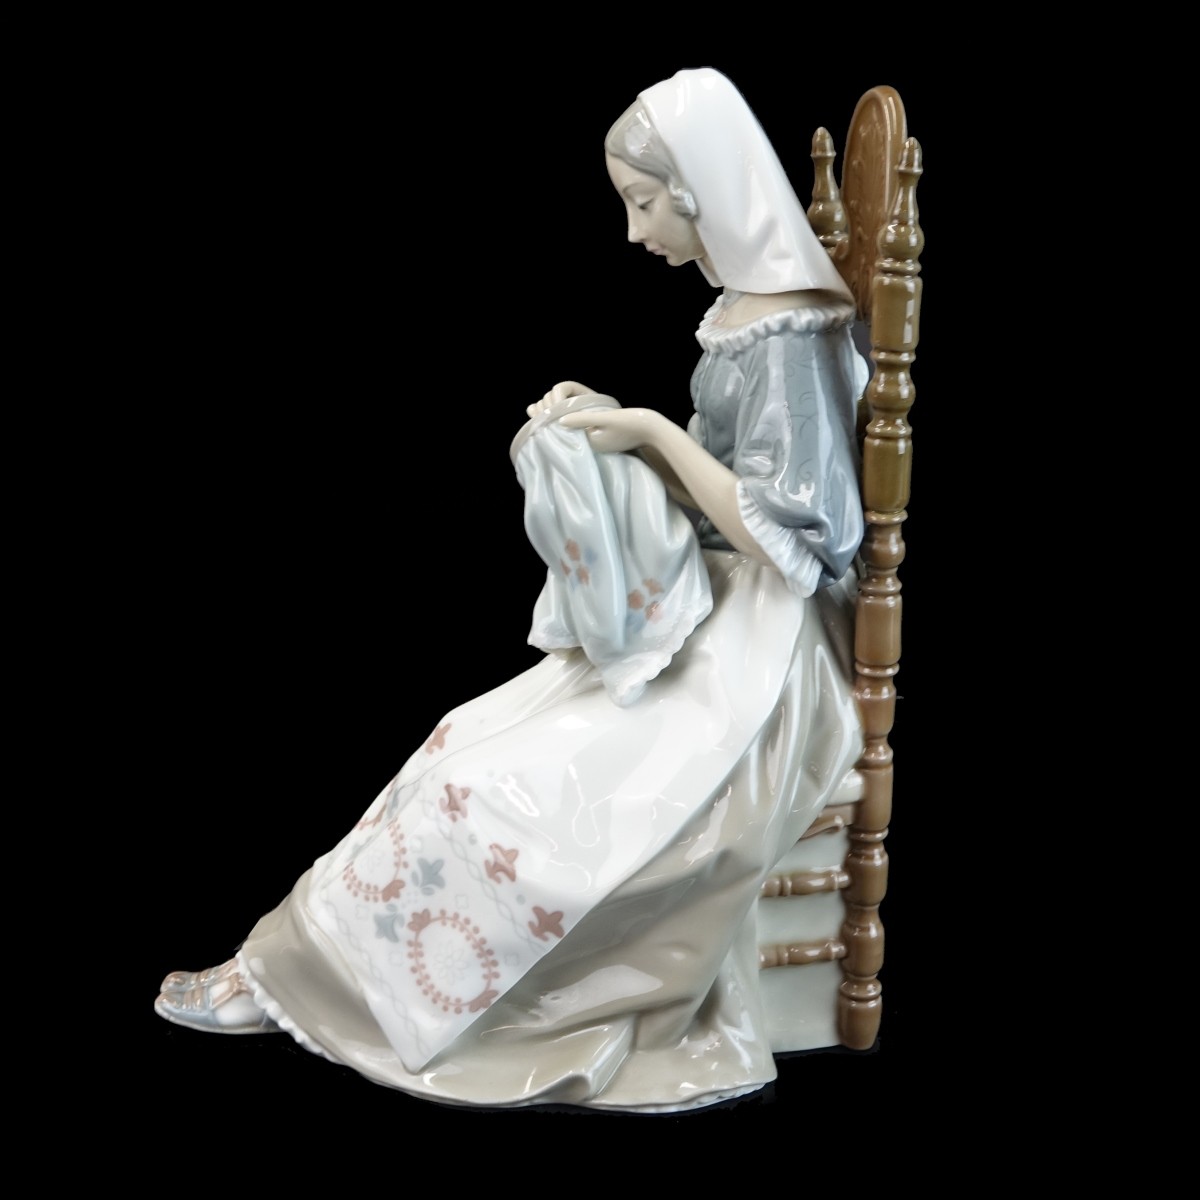 Lladro "Insular Embroideress" Figurine